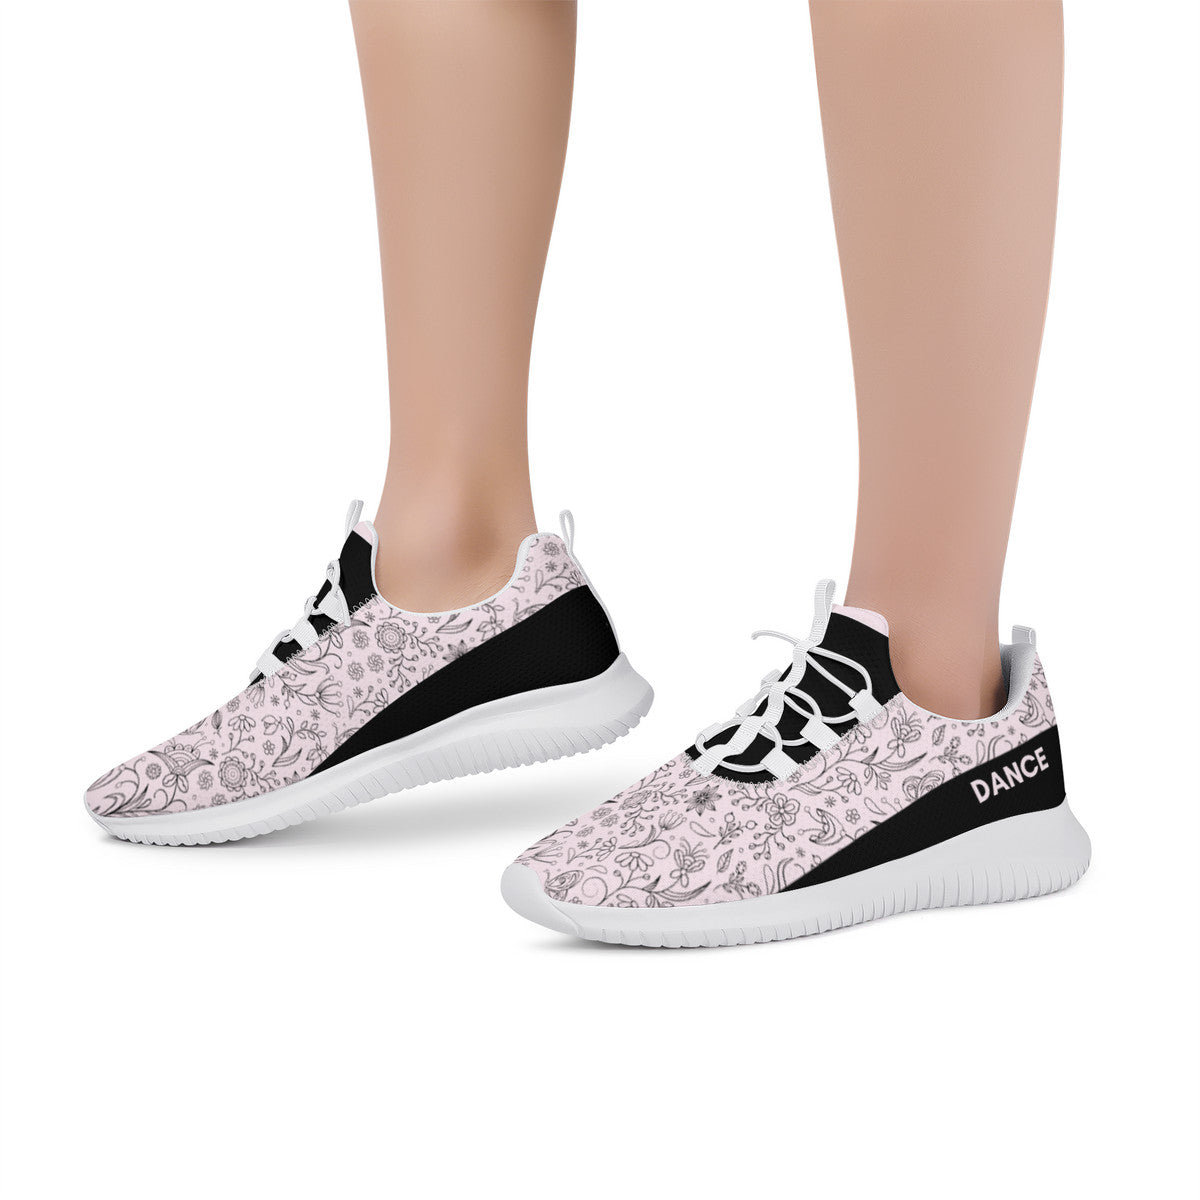 Dance Sneakers - Floral Pink